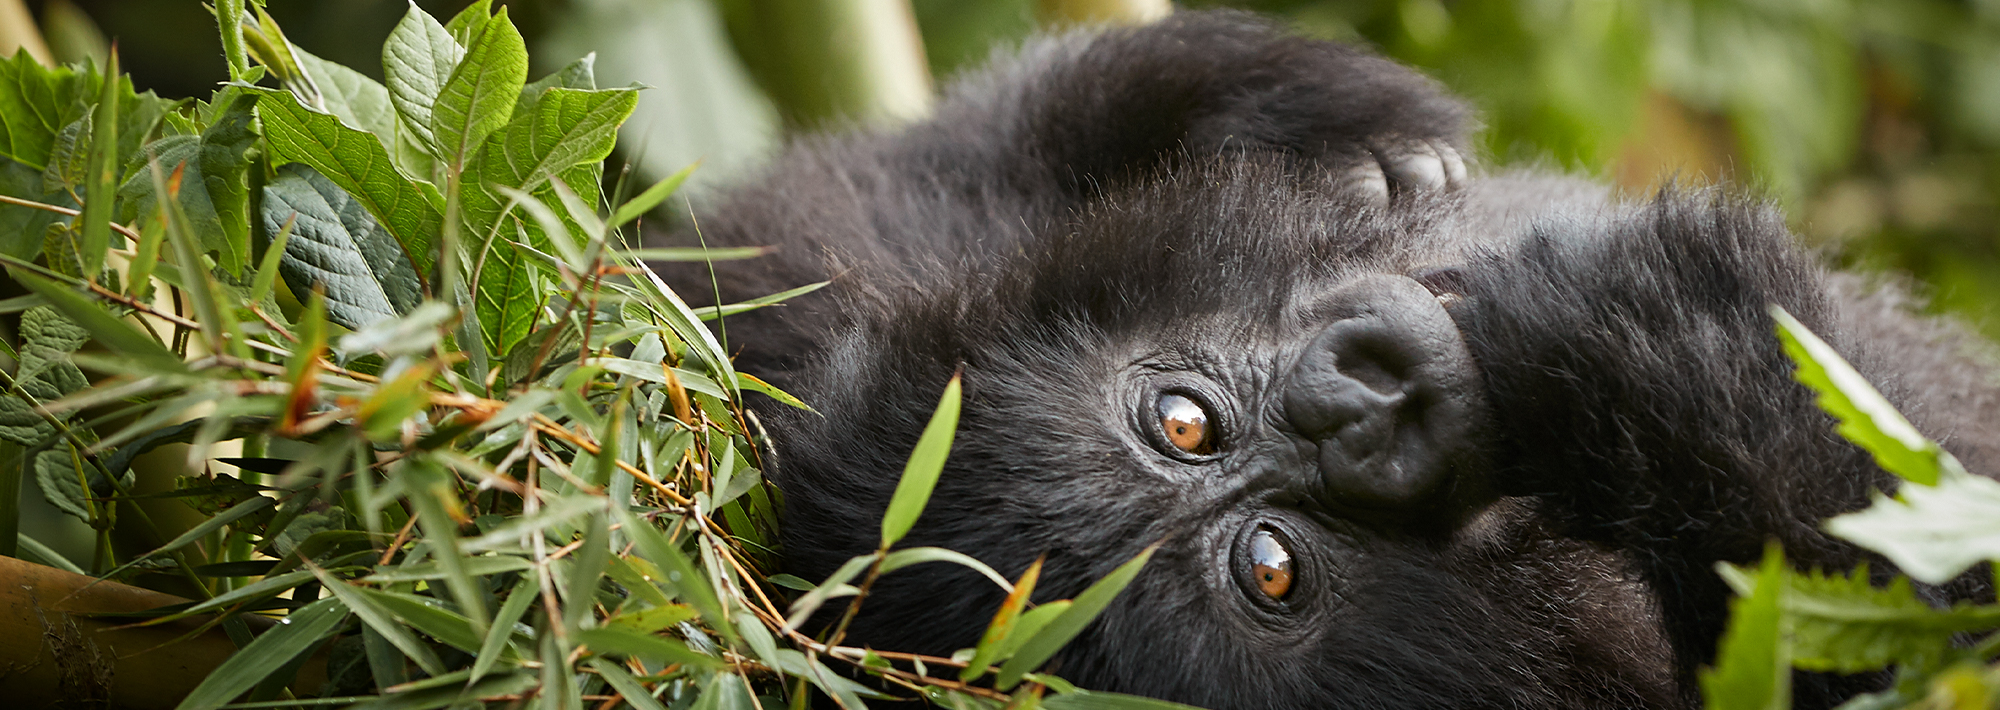 23-day Luxury Uganda Safari with primates and wildlife